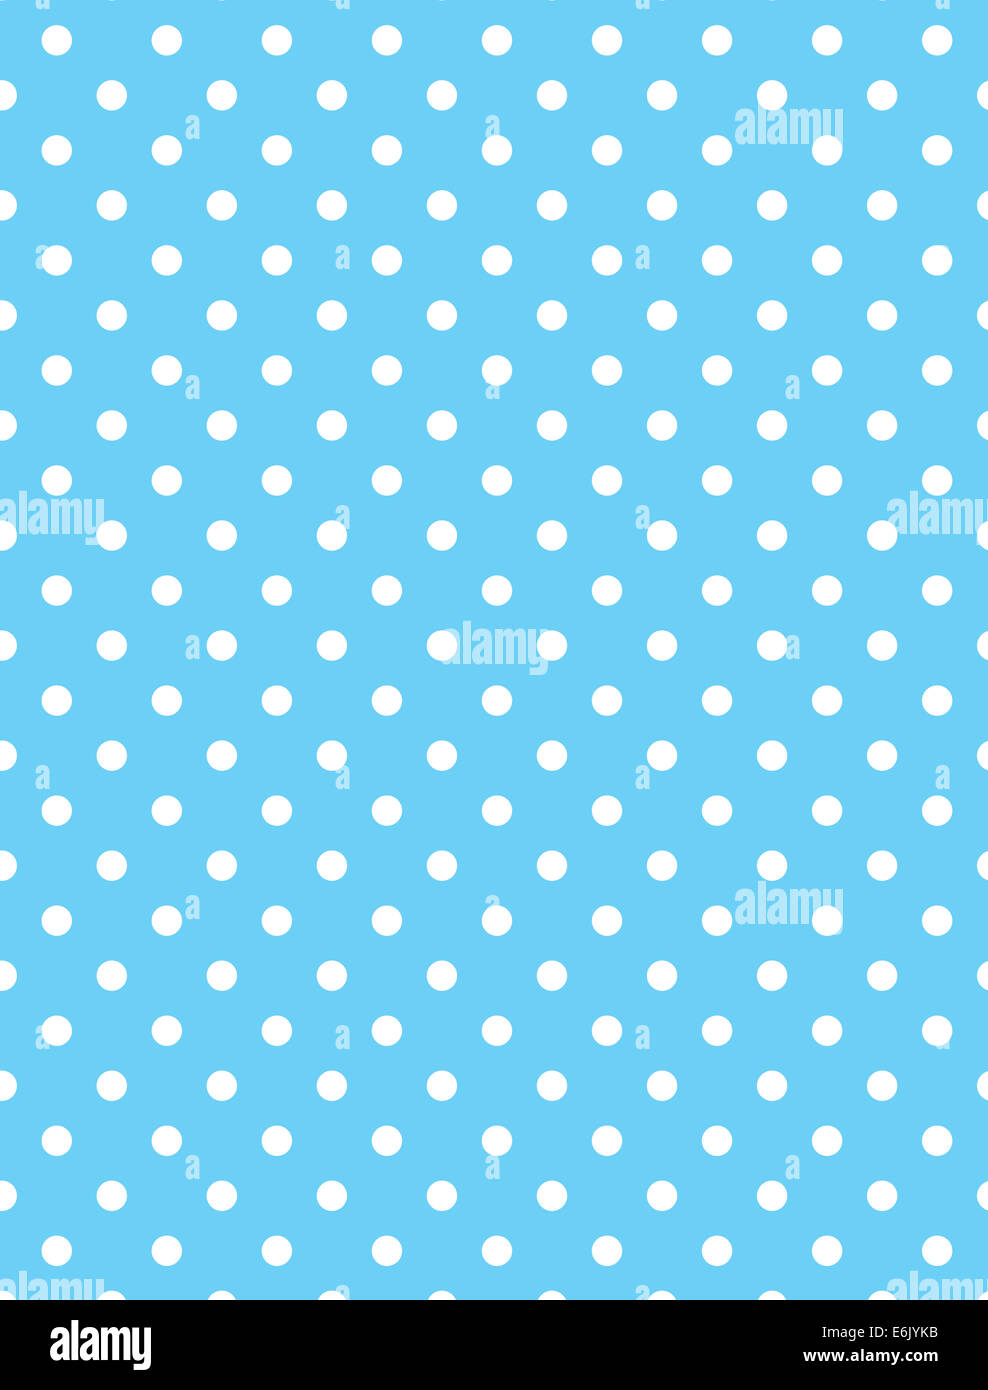 Blue background with white polka dots. jpg Stock Photo - Alamy